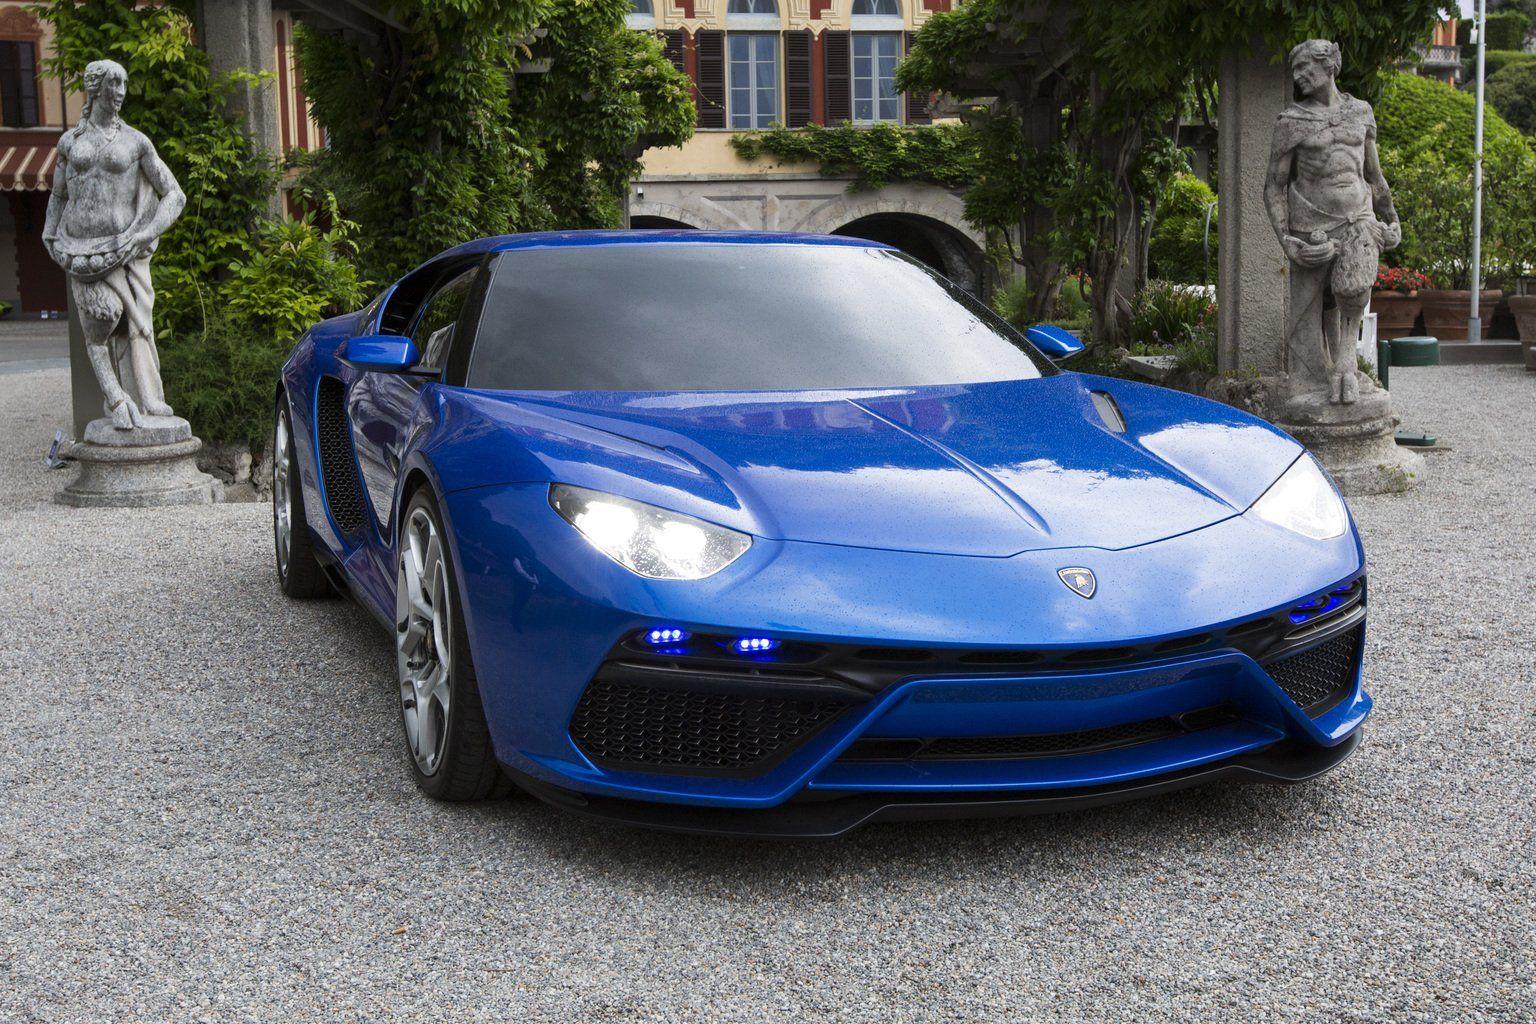 Lamborghini Asterion LPI 910 4 Cars Supercars Concept Blue